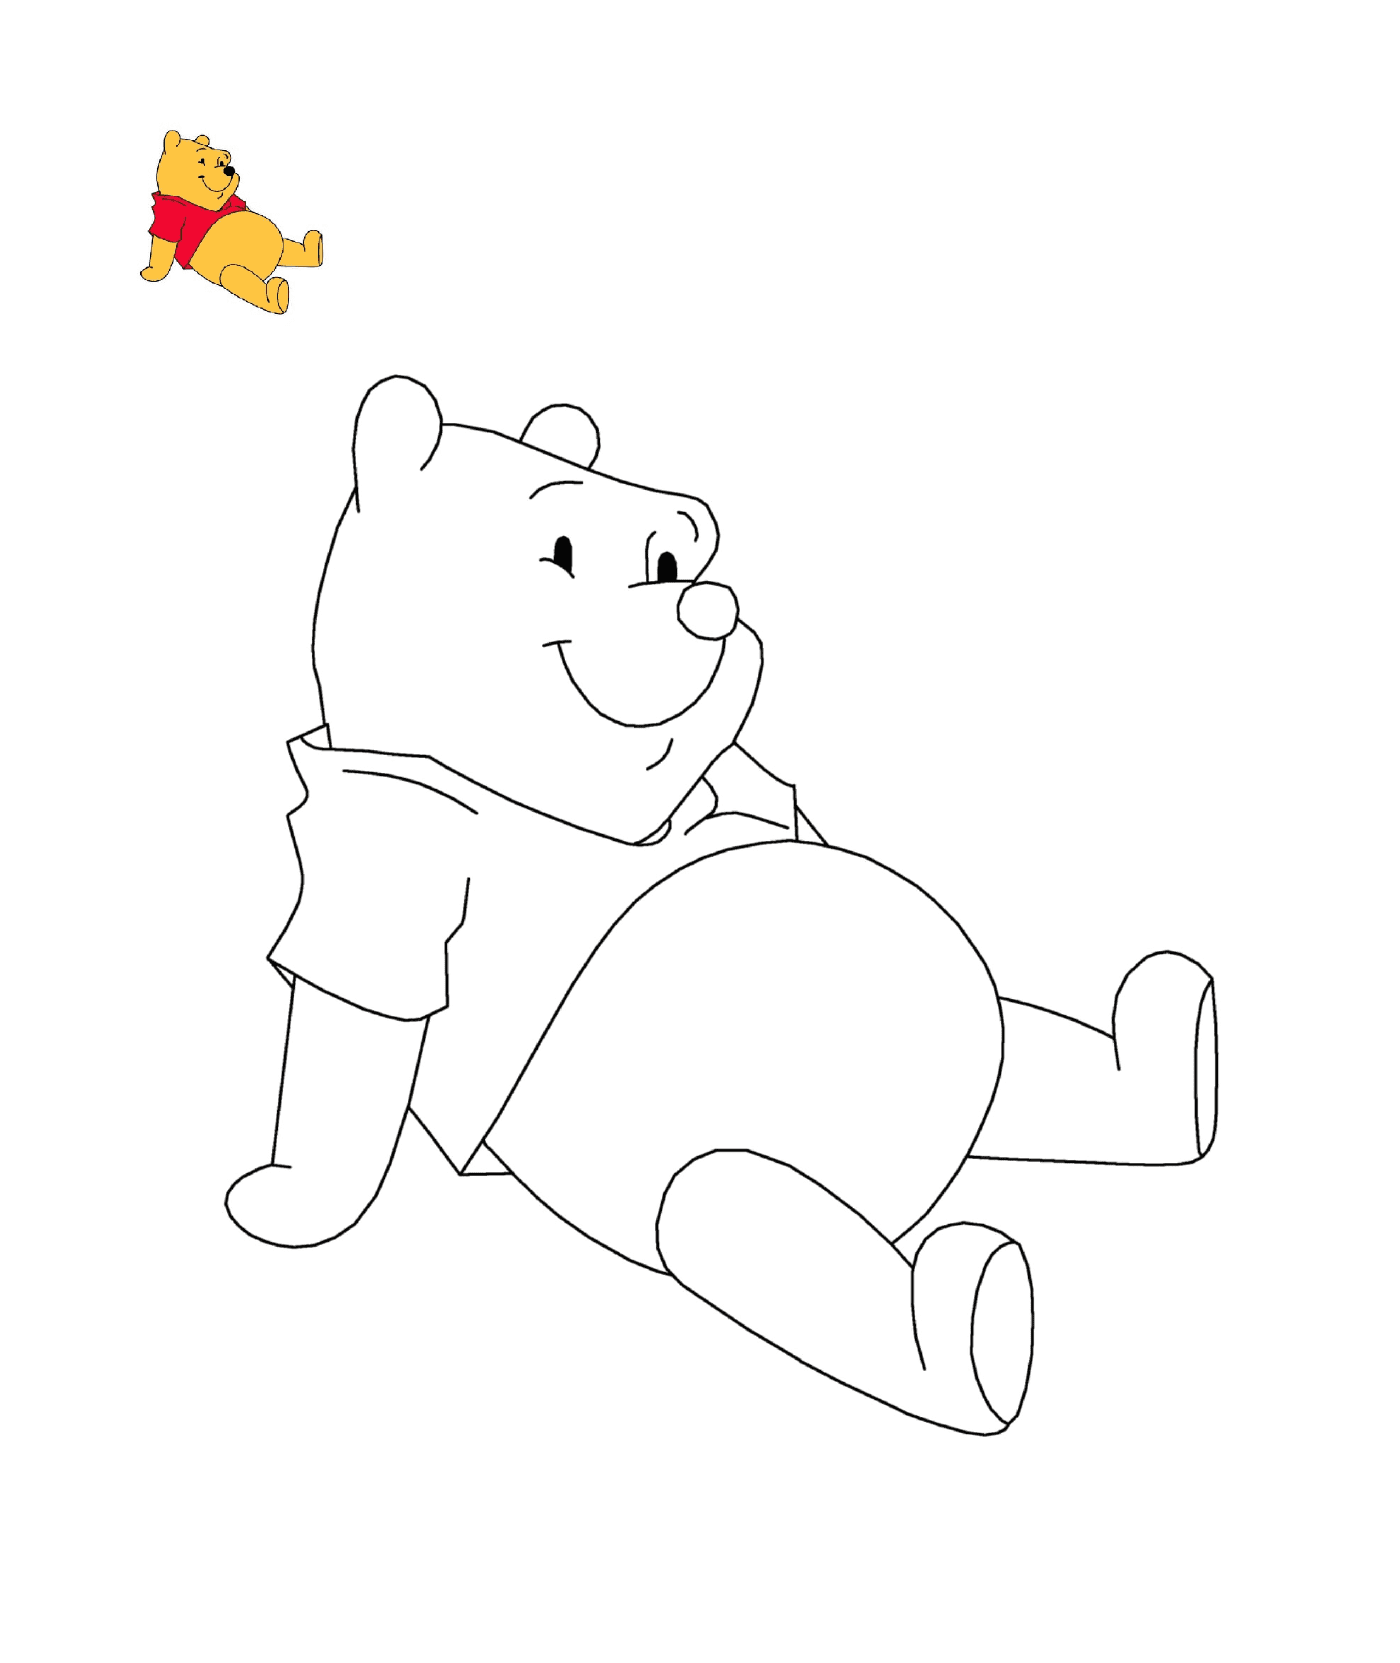  Winnie the bear is sitting on the floor 